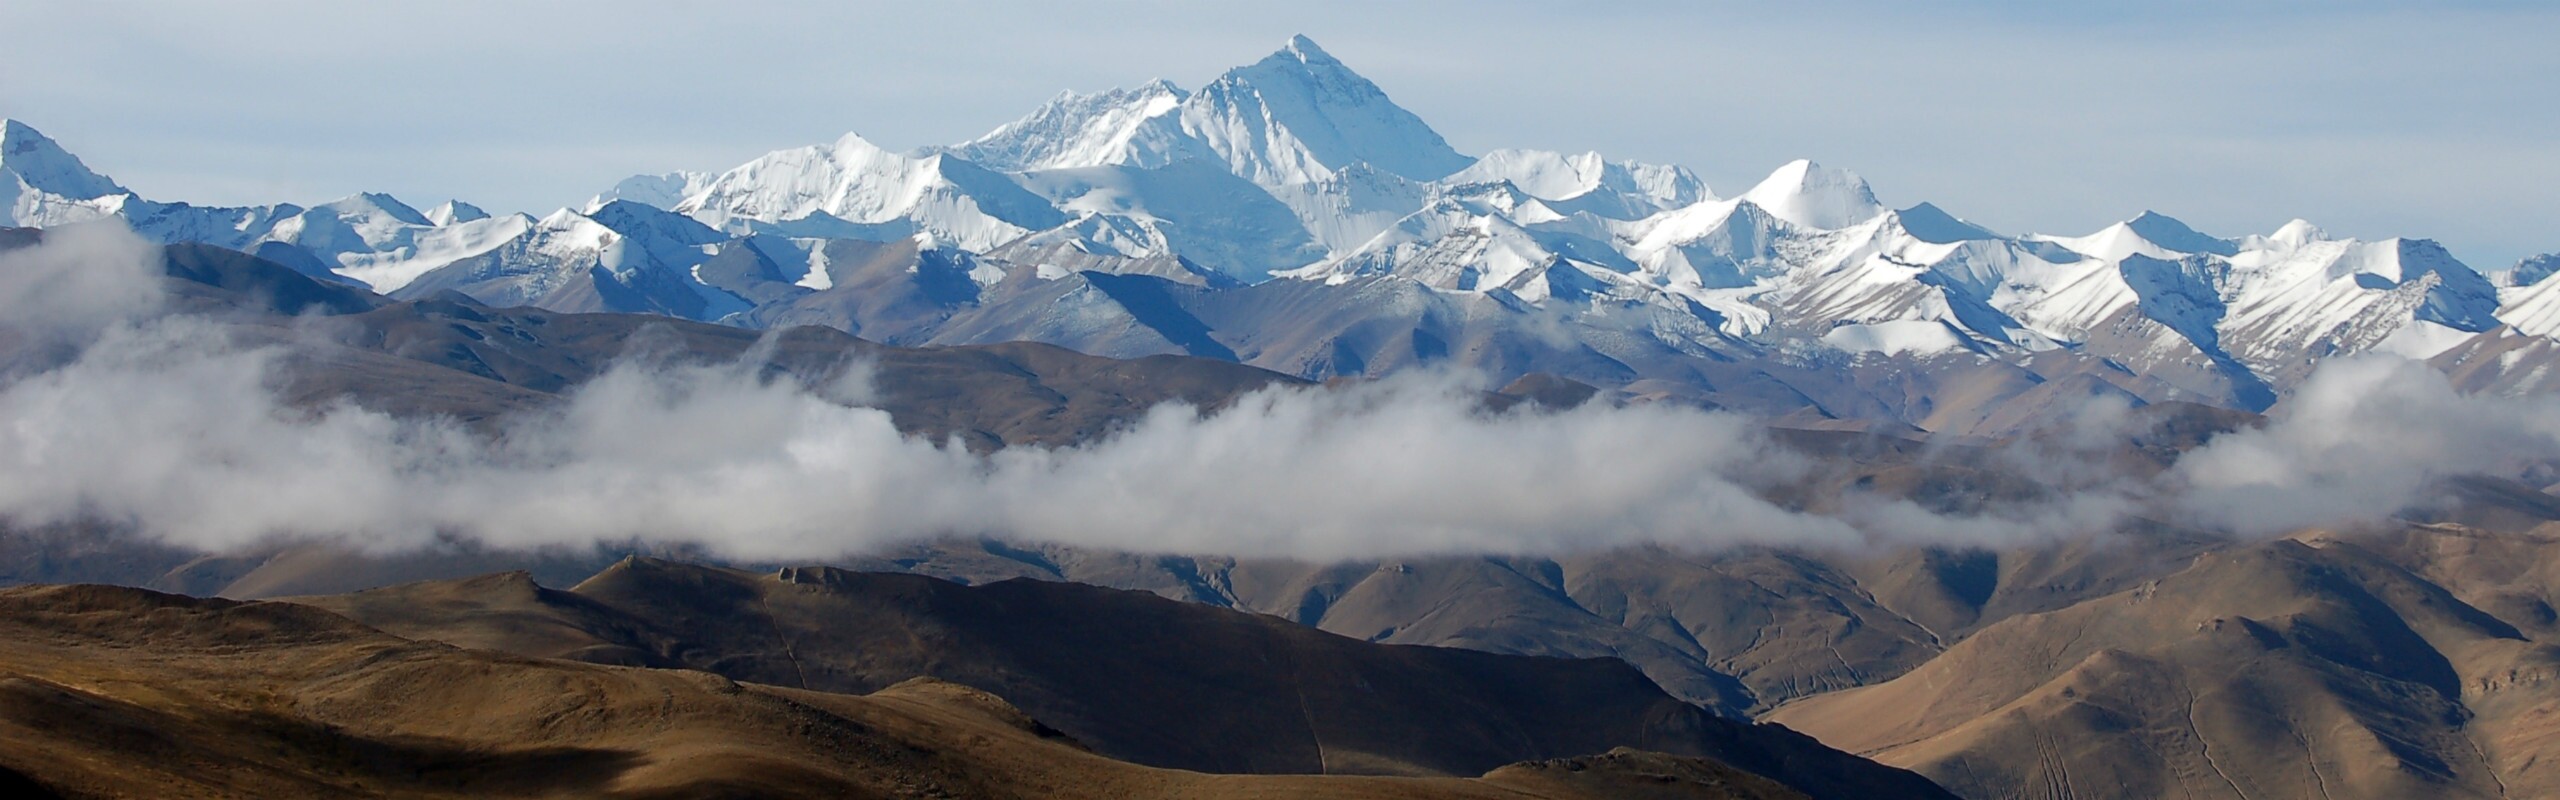 11-Day Tibet Tour with Everest Base Camp Trek